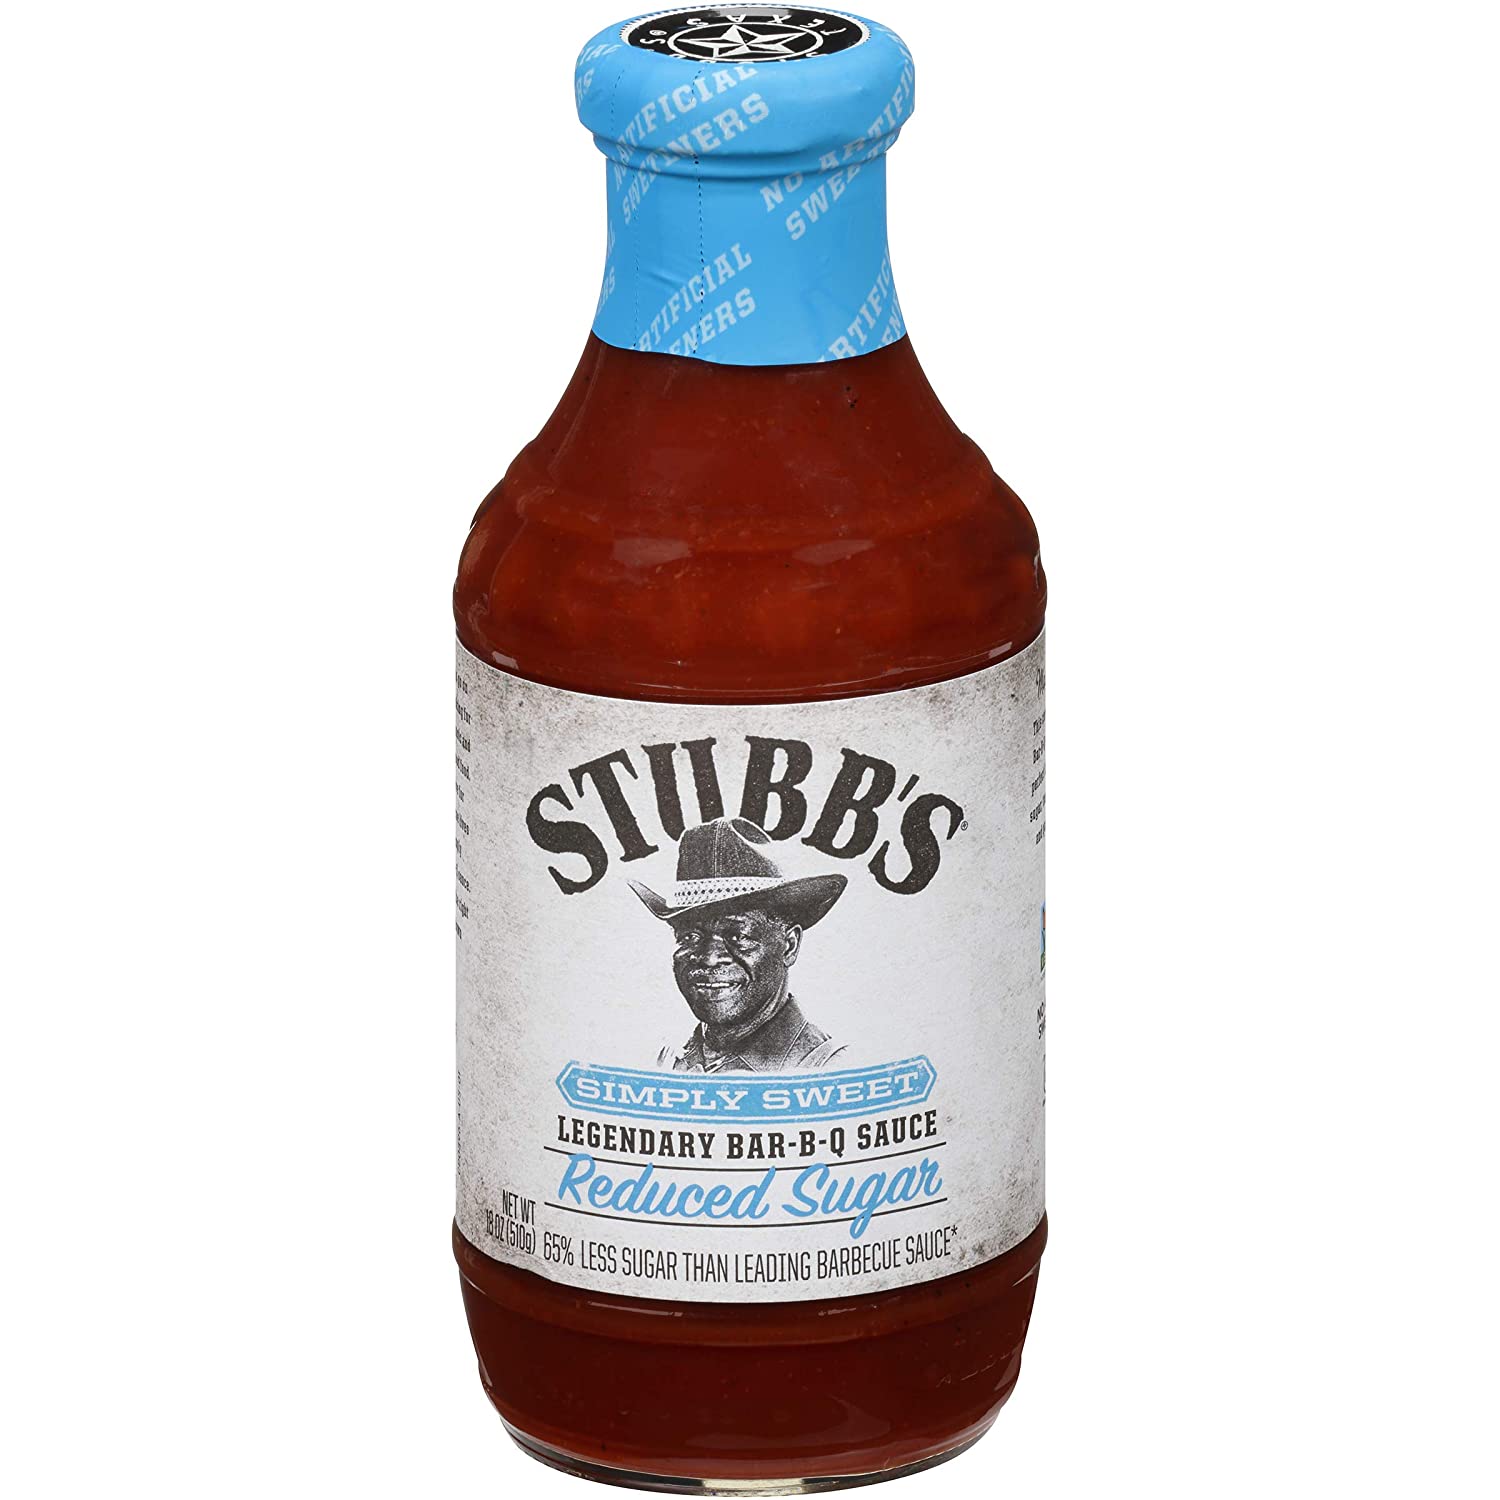 Stubbs Simply Sweet Reduced Sugar BBQ Sauce 510g